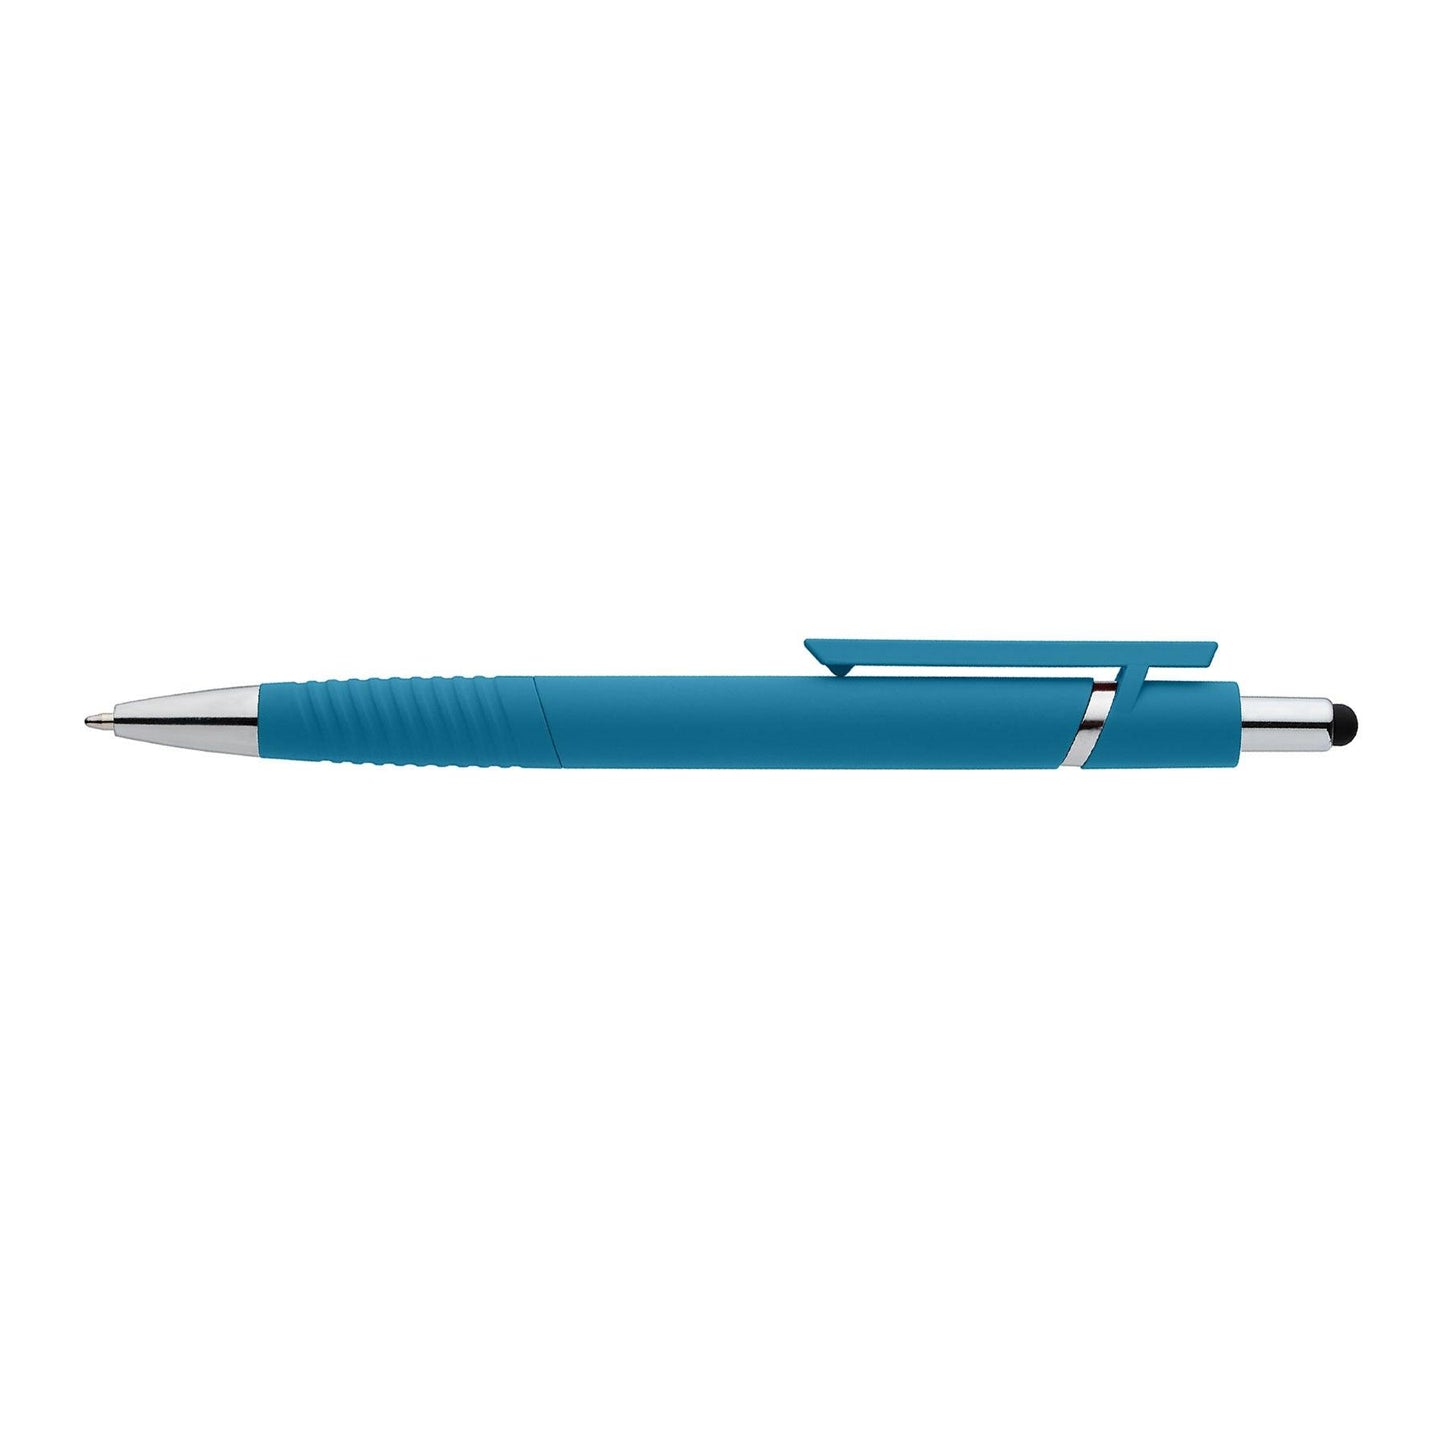 VelvetGlide Stylus Pen (CLP) - Persopens Promotional Products LTD